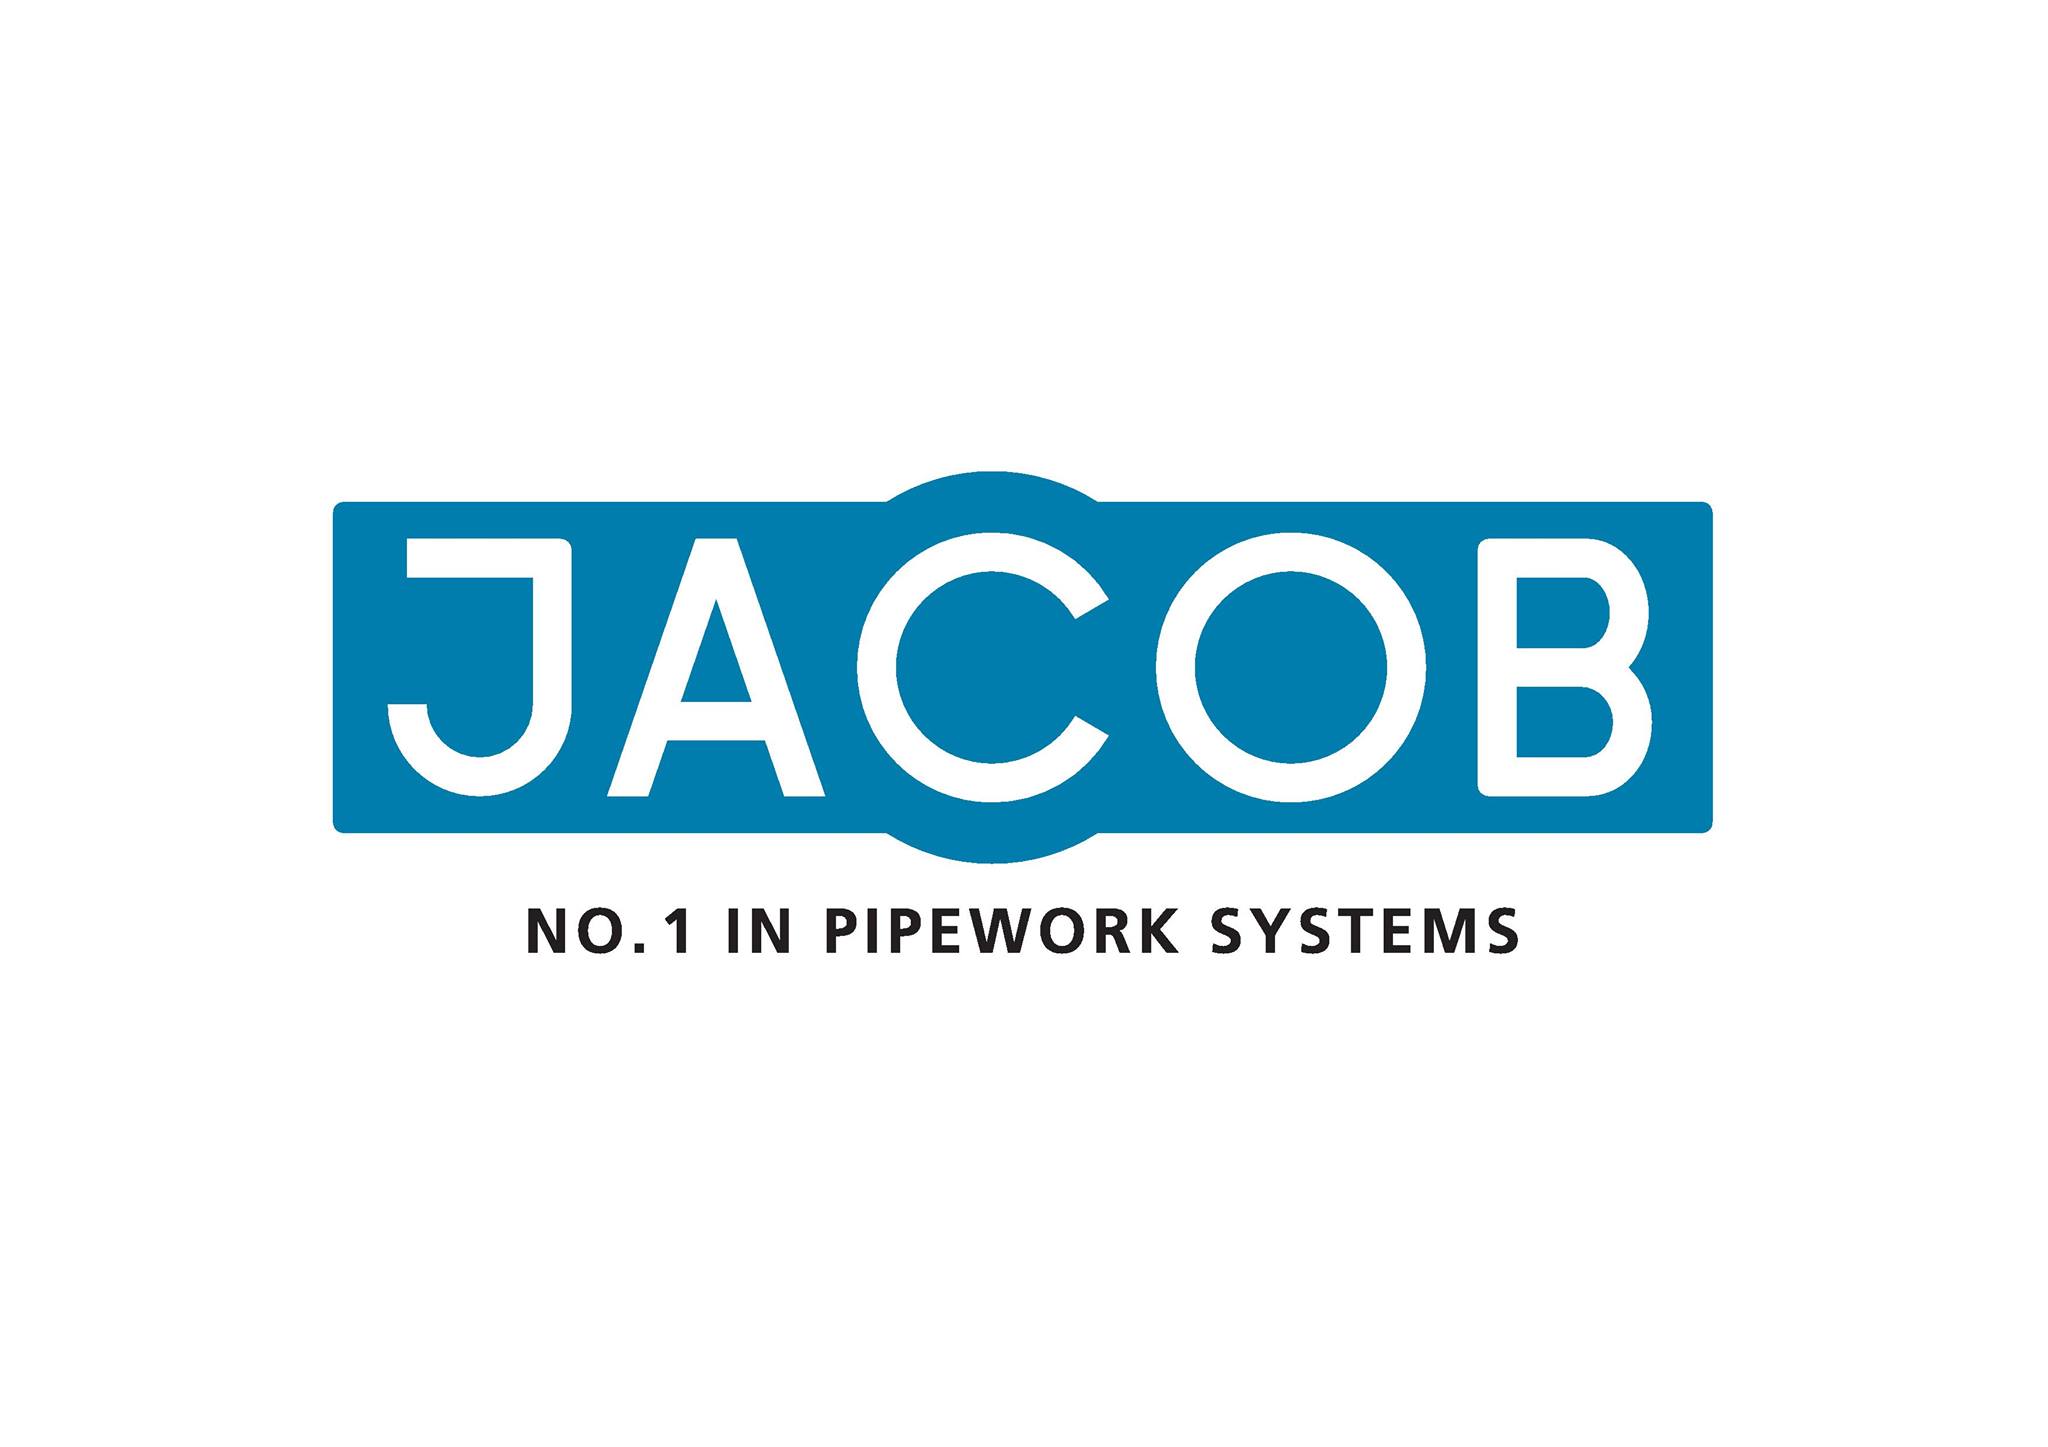 Fr. Jacob Shne GmbH & Co. KG